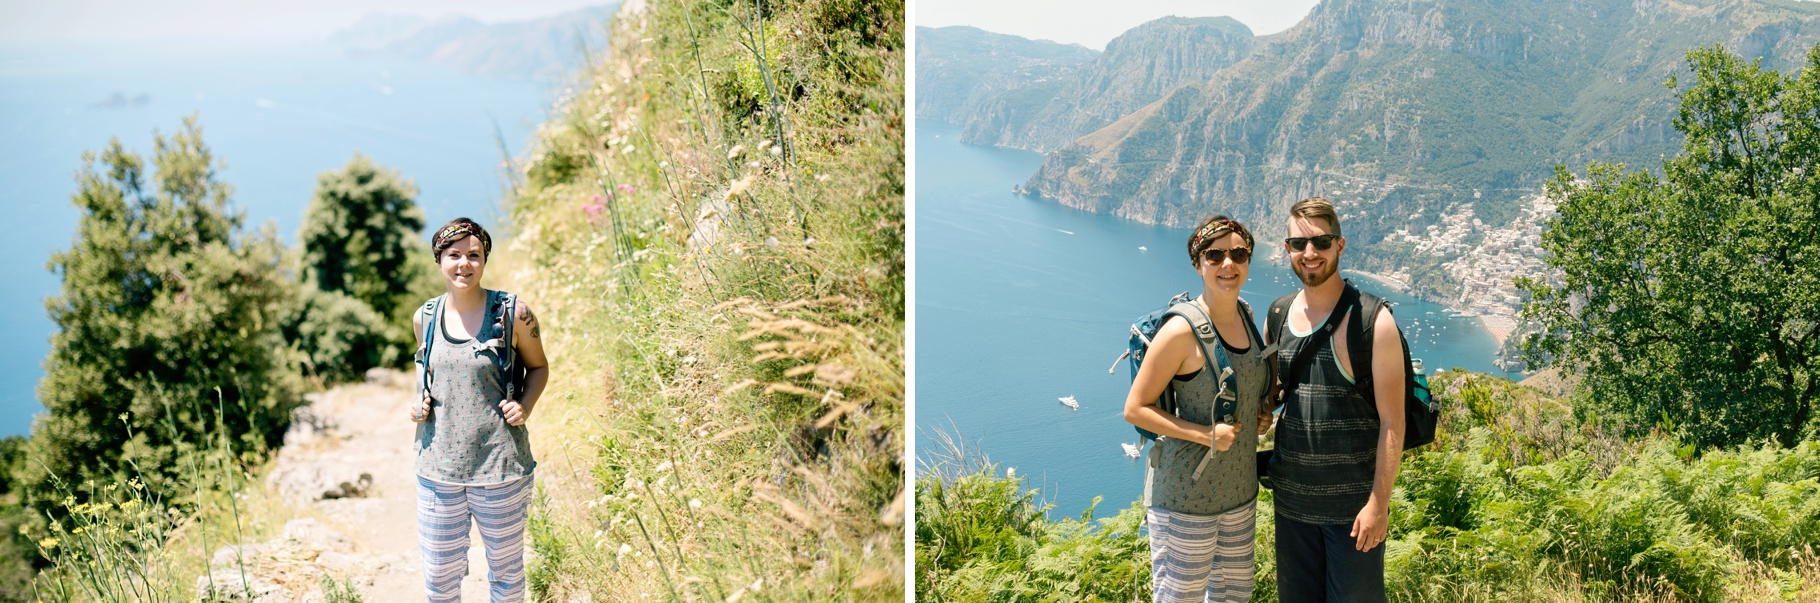 25-Positano-Almalfi-Coast-Path-of-the-Gods-Hiking-Cliffs-Ocean-Italy-Europe-Travel-Seattle-Wedding-Photographer-Photography-by-Betty-Elaine-Anniversary-Trip